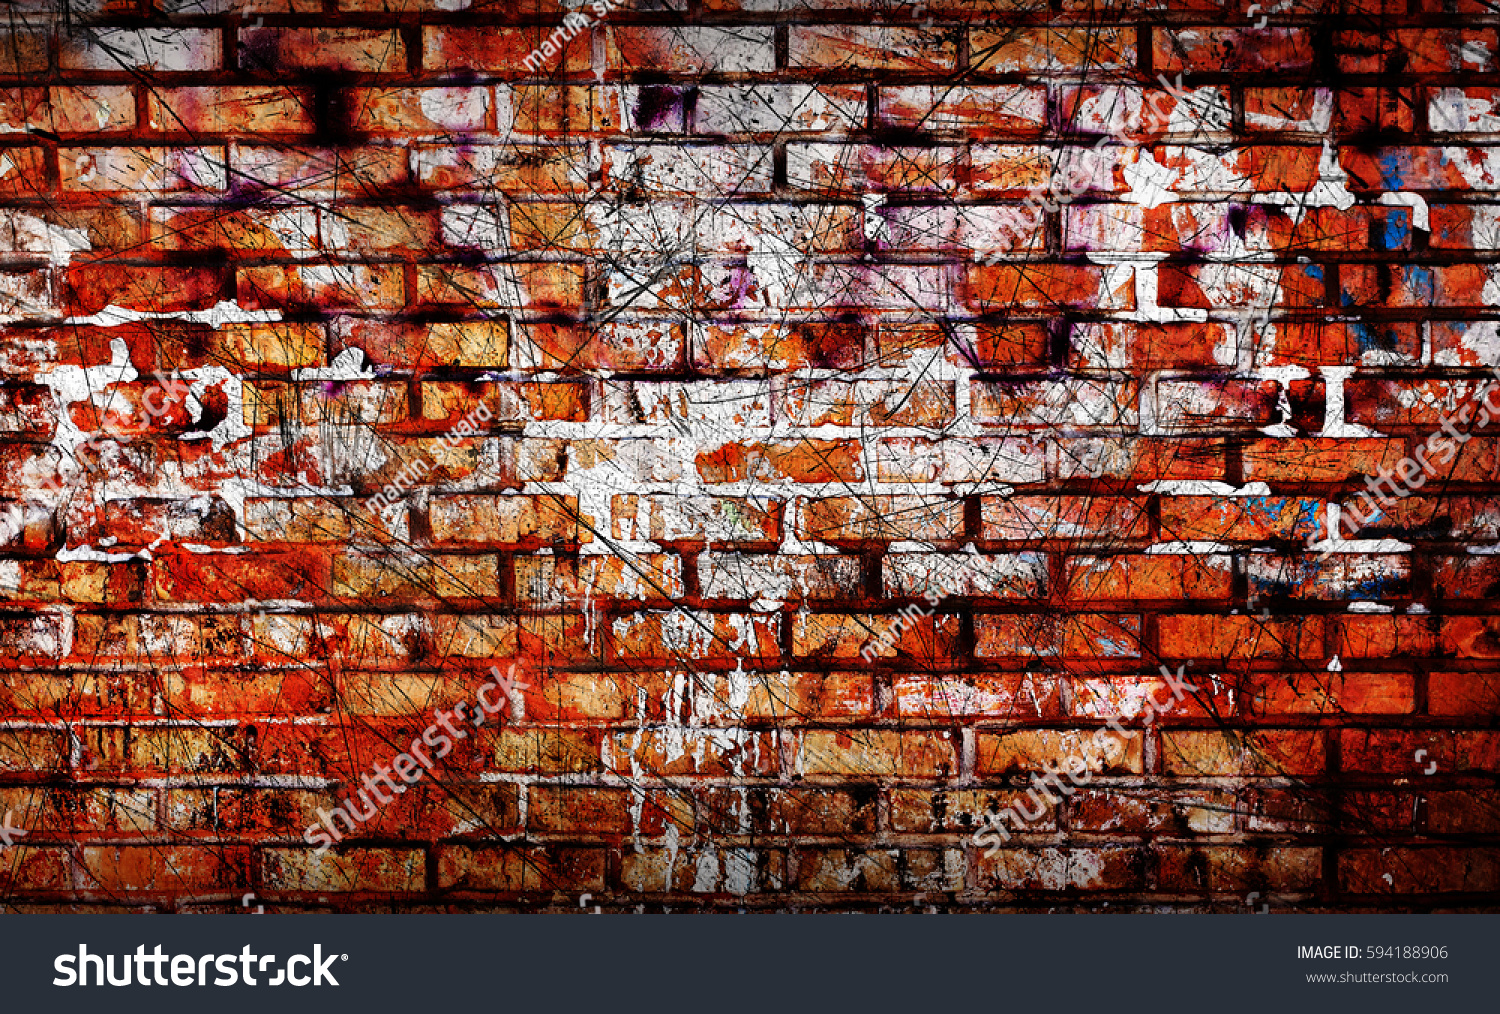 77,749 Graffiti bricks Images, Stock Photos & Vectors | Shutterstock